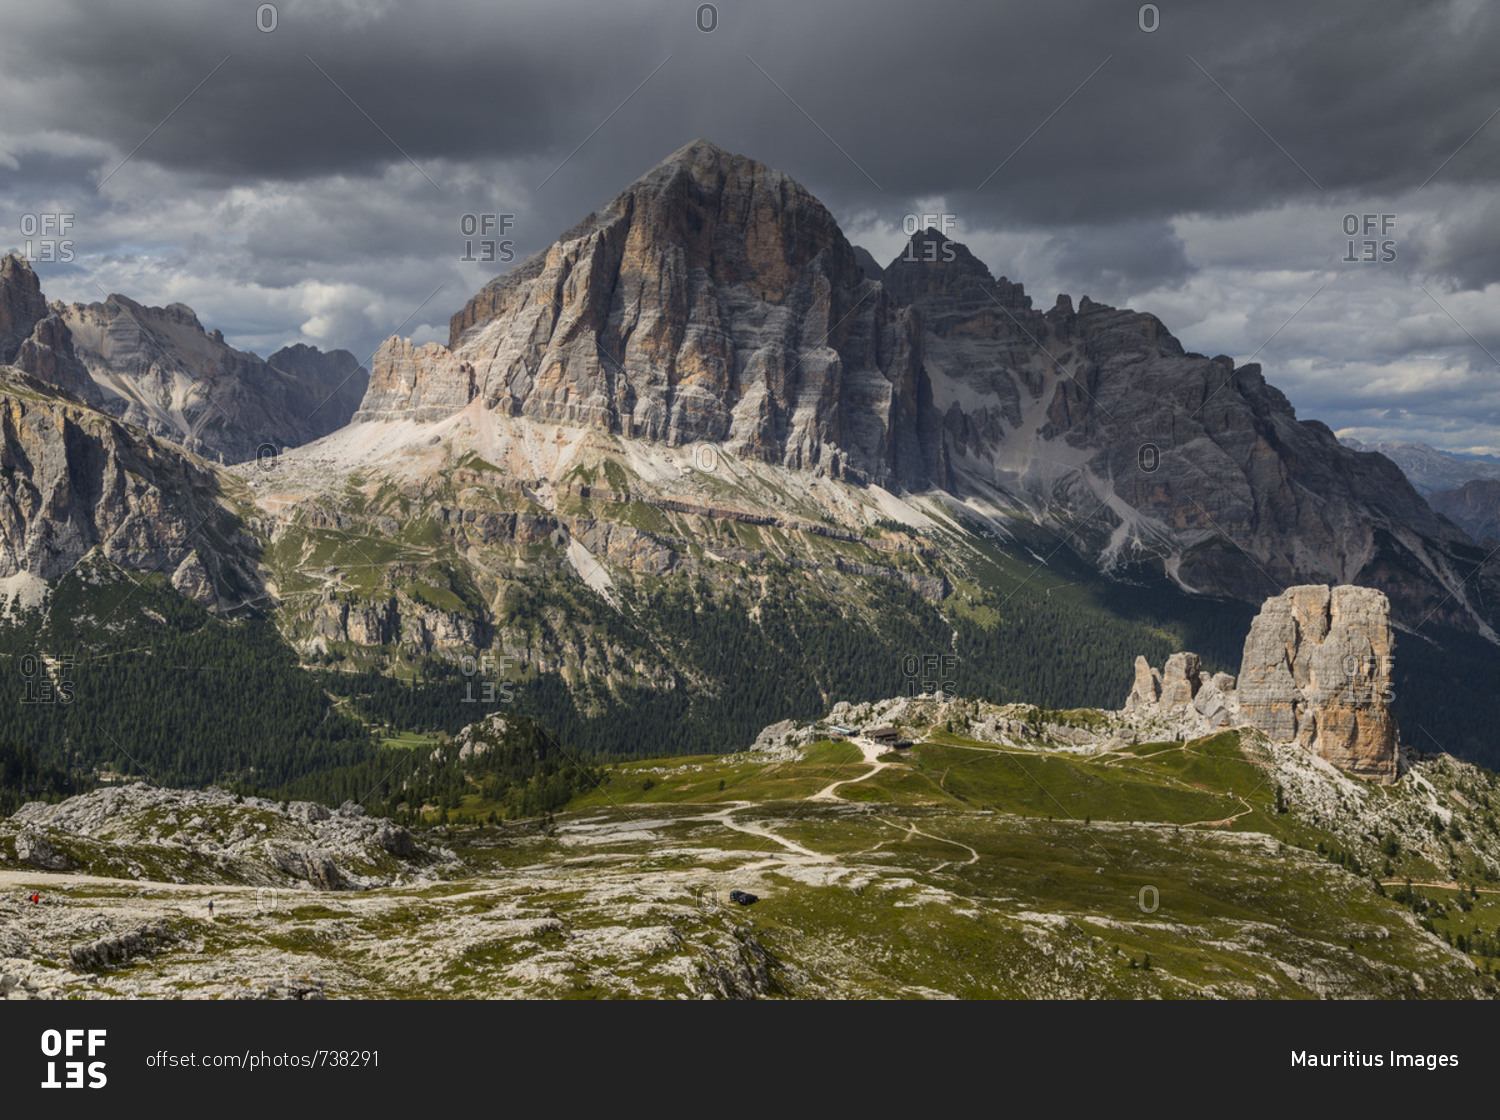 Europe, Italy, Alps, Dolomites, Mountains, Cinque Torri, Tofane, View from Rifugio Averau